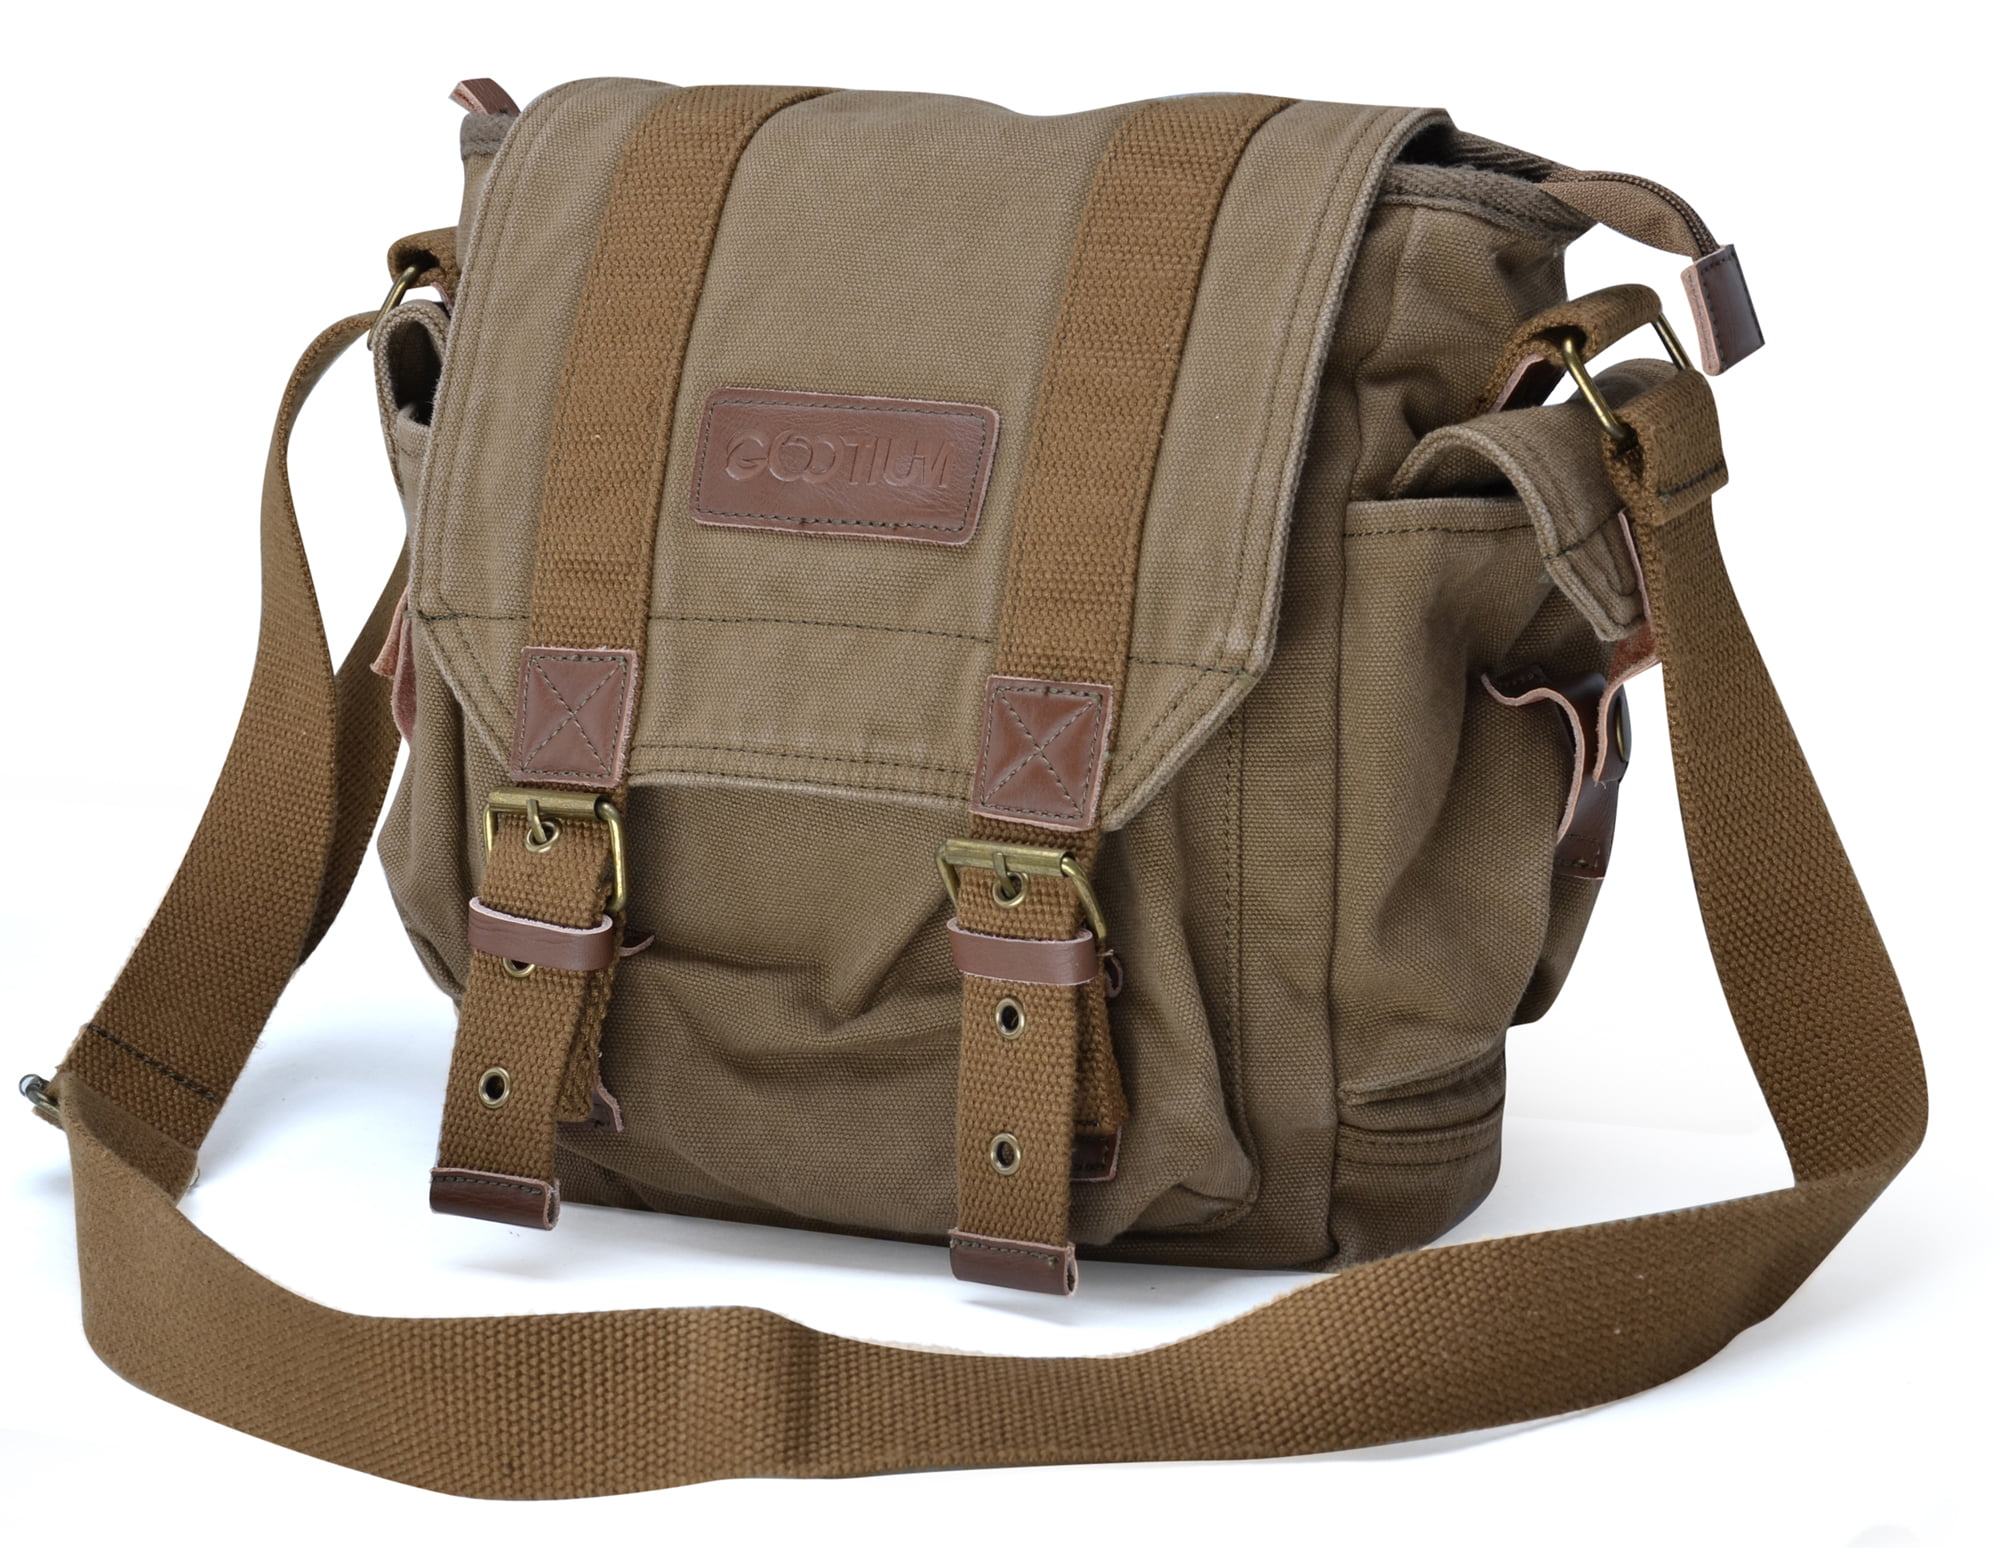 Mil-tec Military Style Shoulder Bag - 700375, Military 